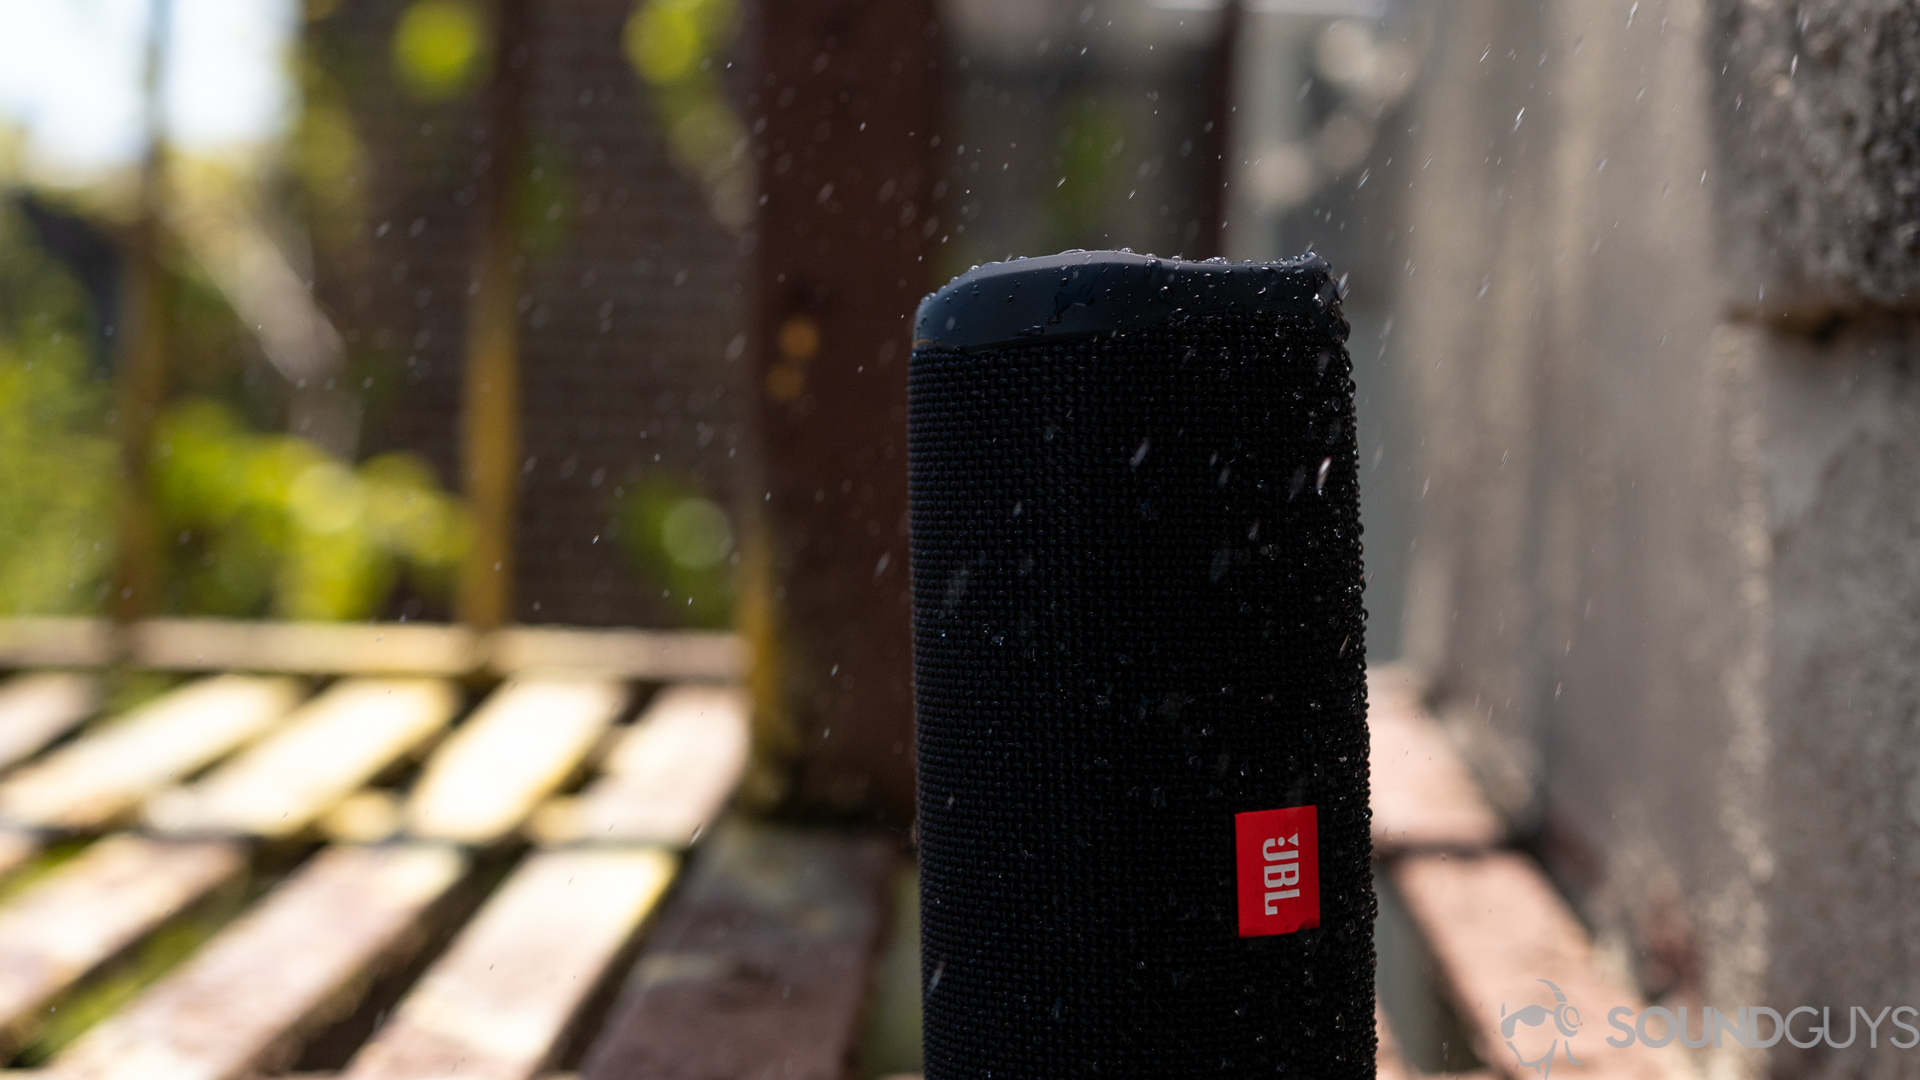 JBL Flip 5 Waterproof Bluetooth Speaker with Case(Eco Green) 